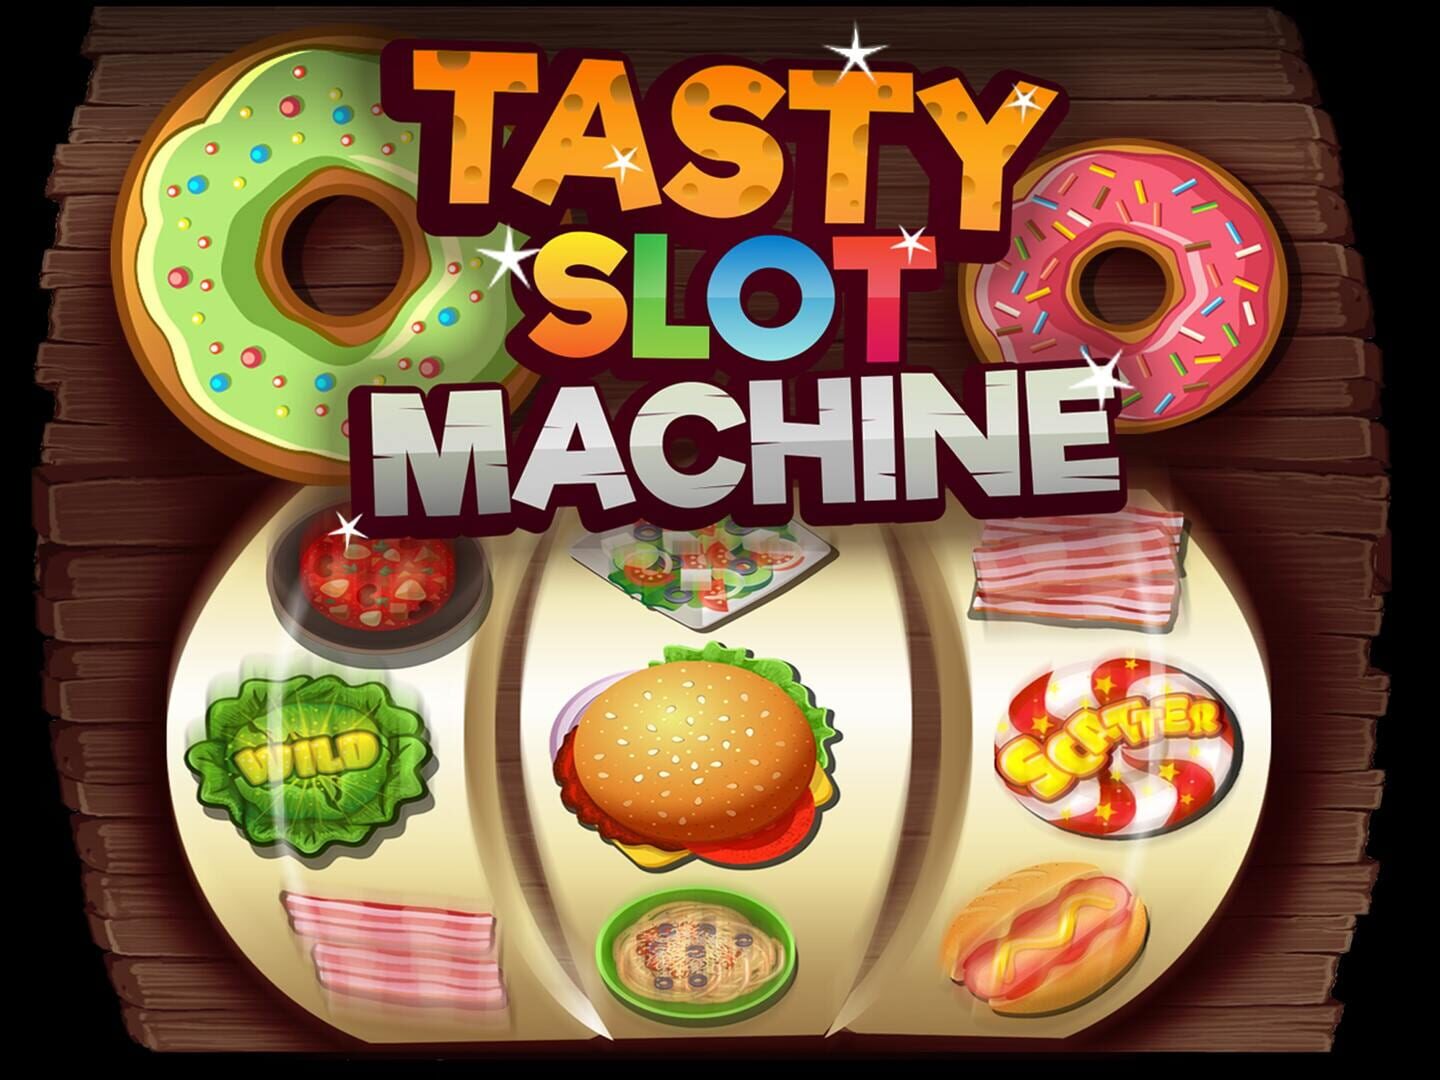 Arte - Tasty Slot Machine